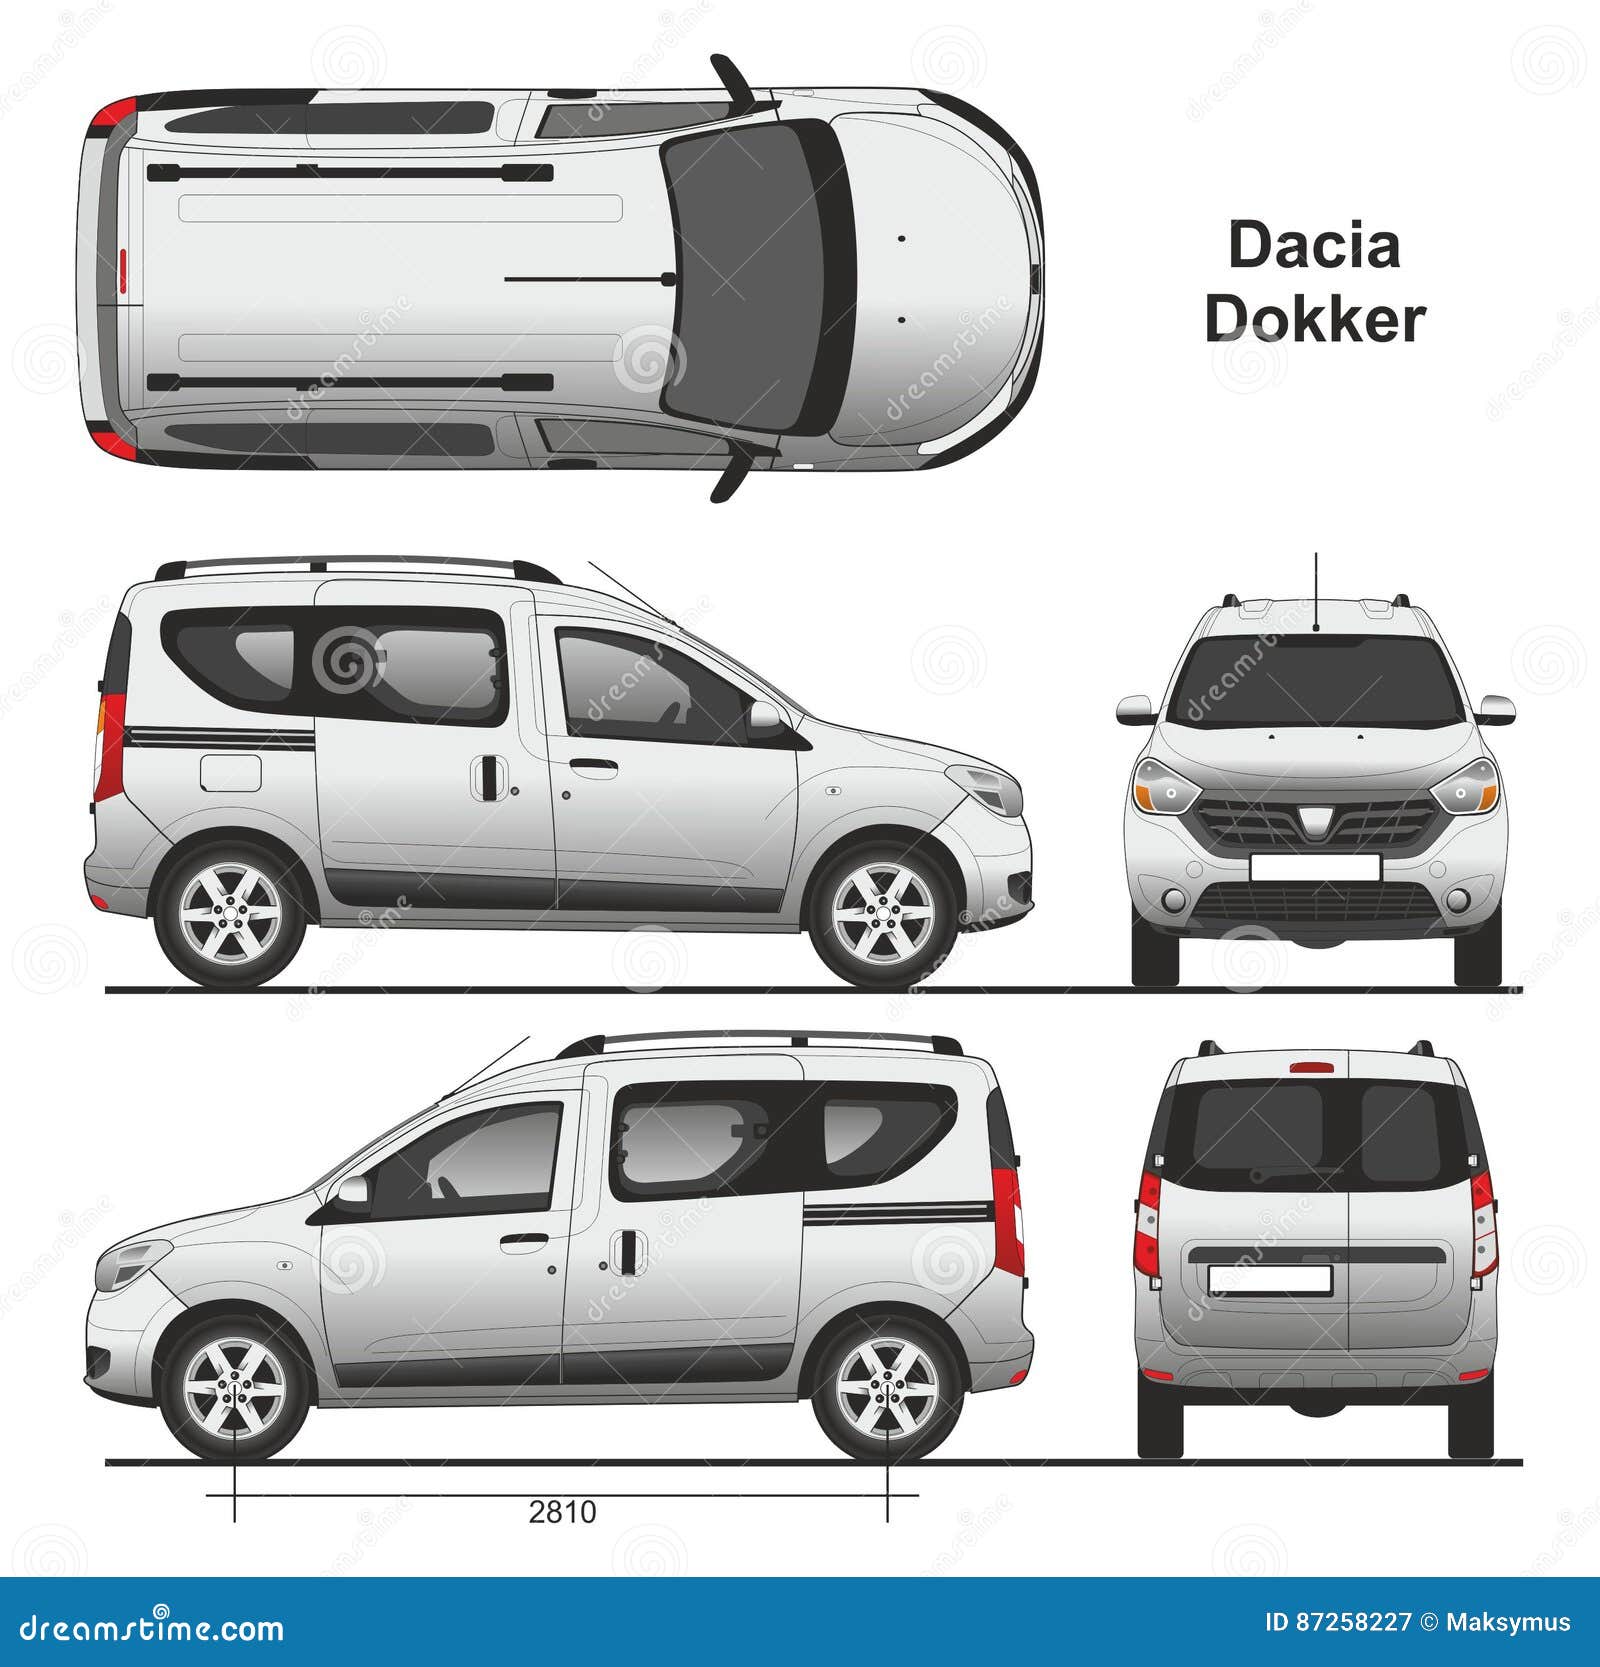 Dacia Dokker Passenger Van 2013 Editorial Photography